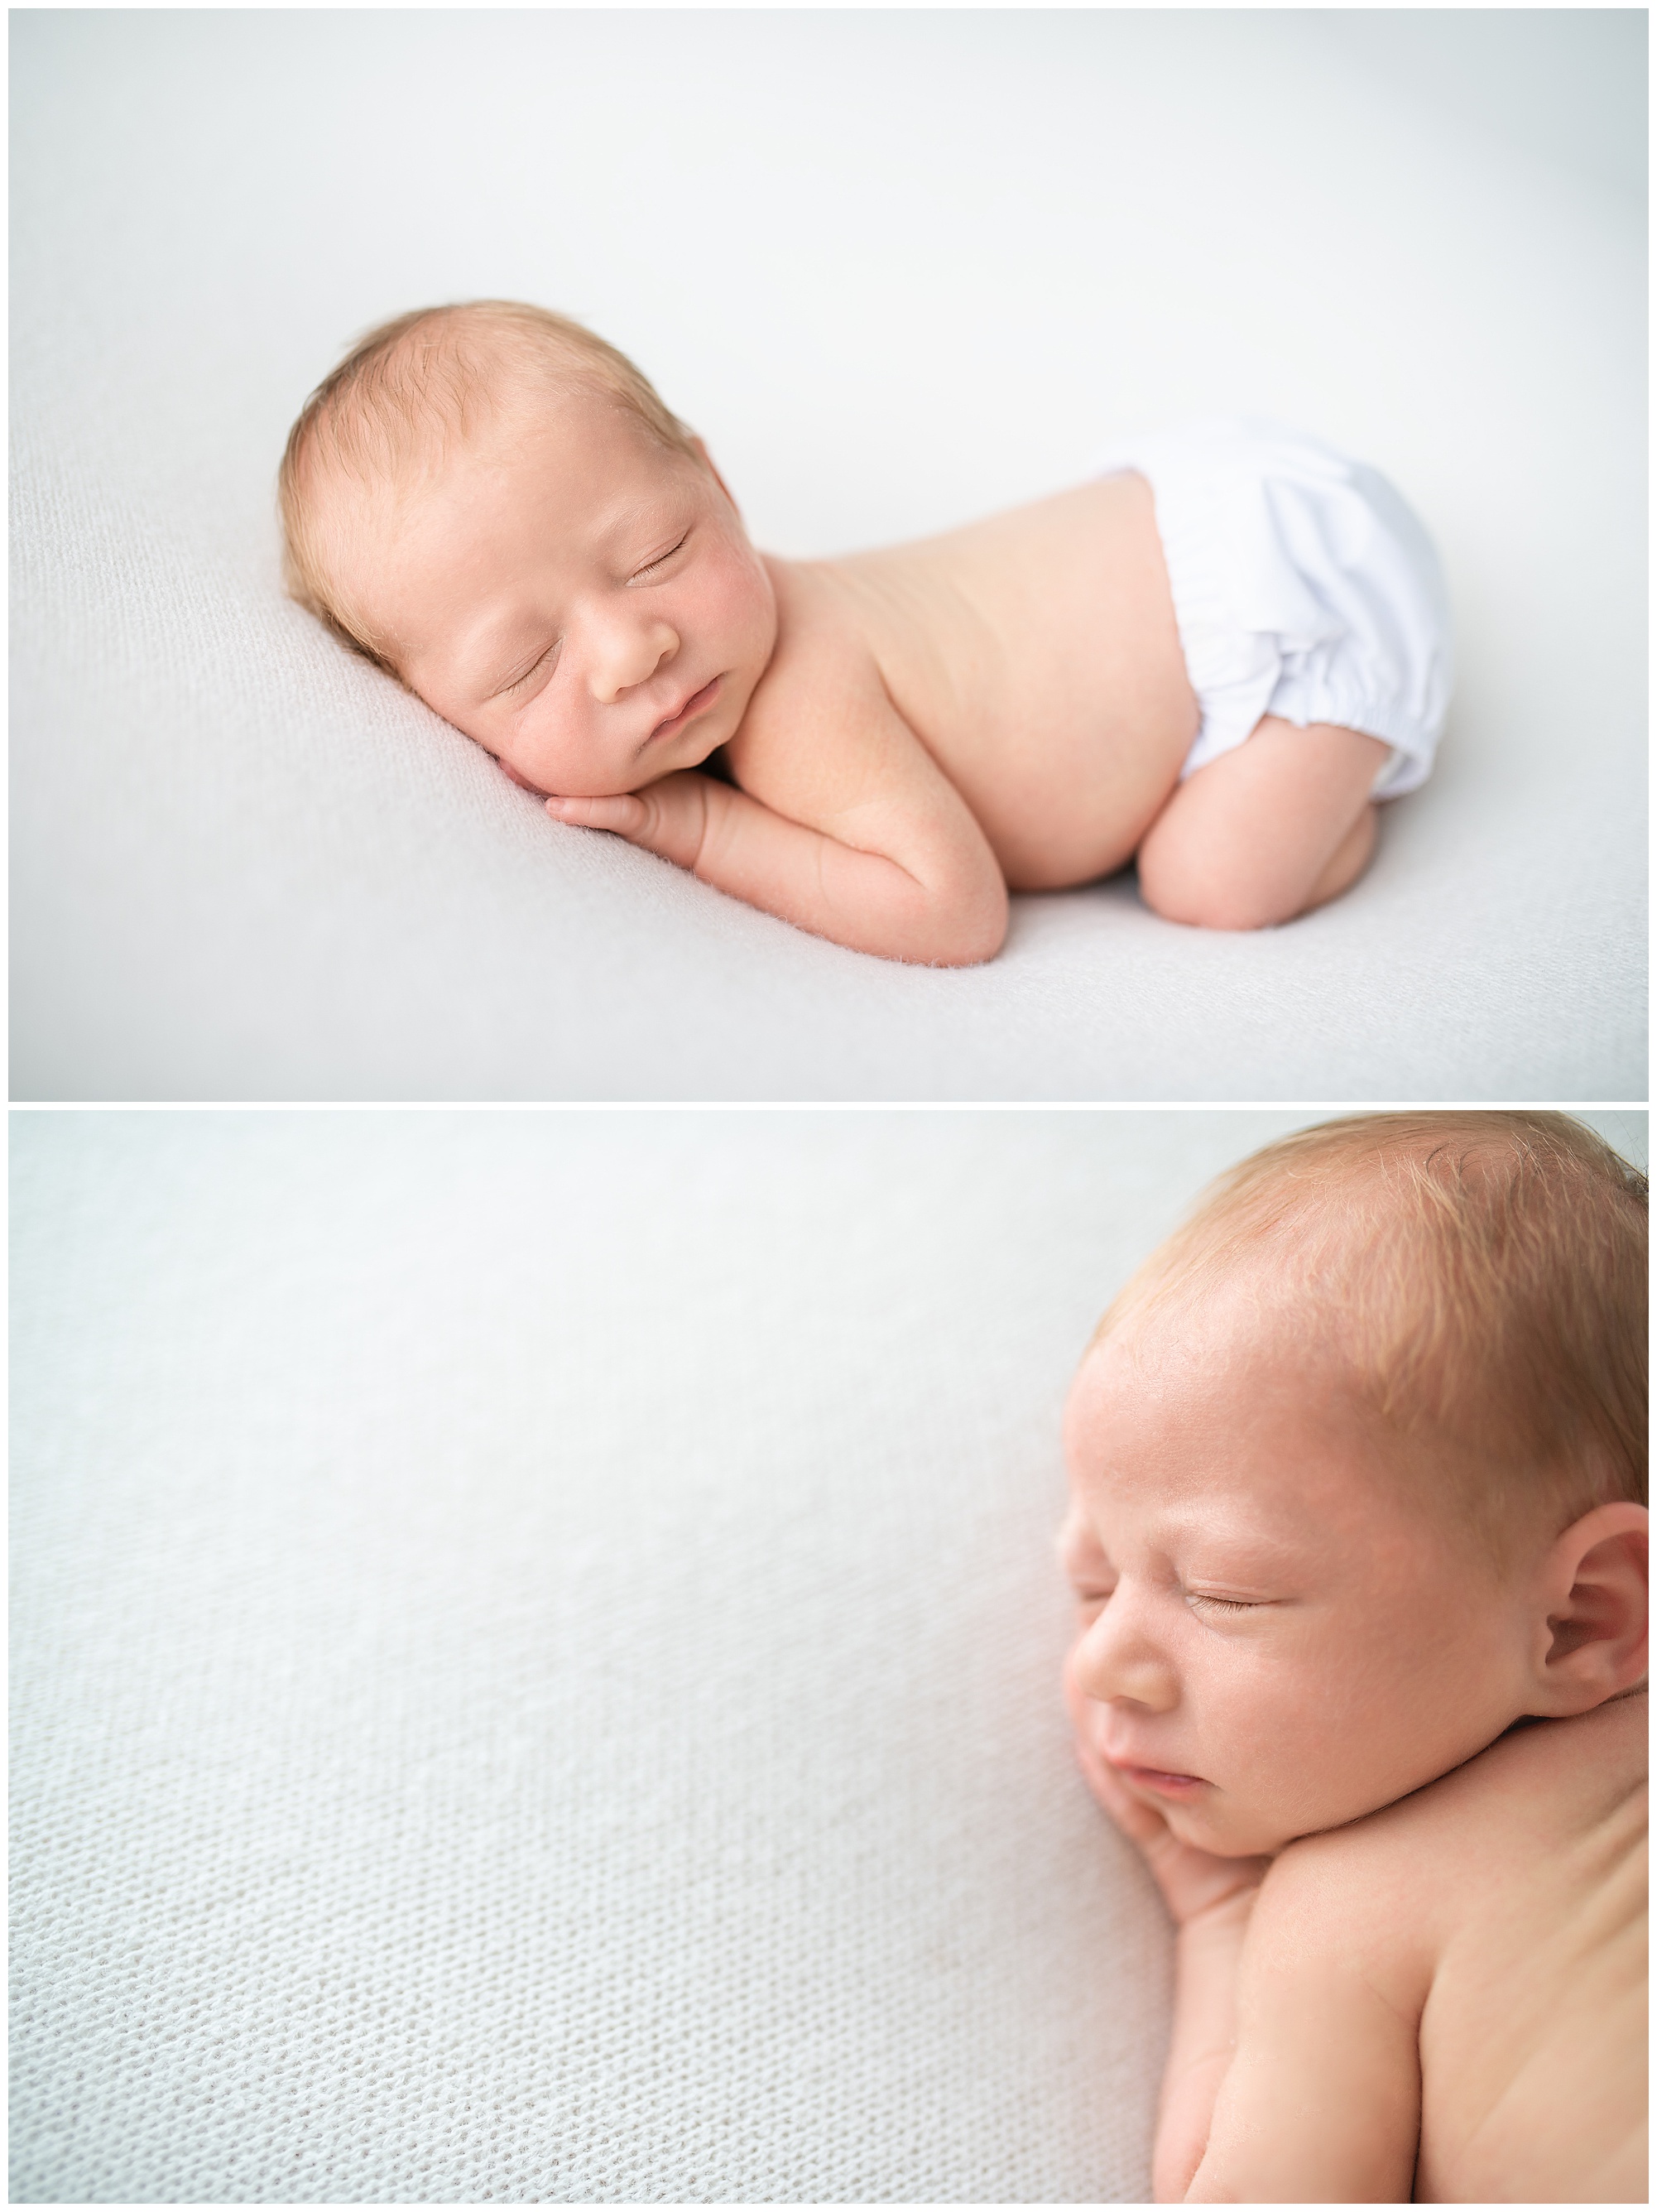 newborn laying peacefully during his newborn photos